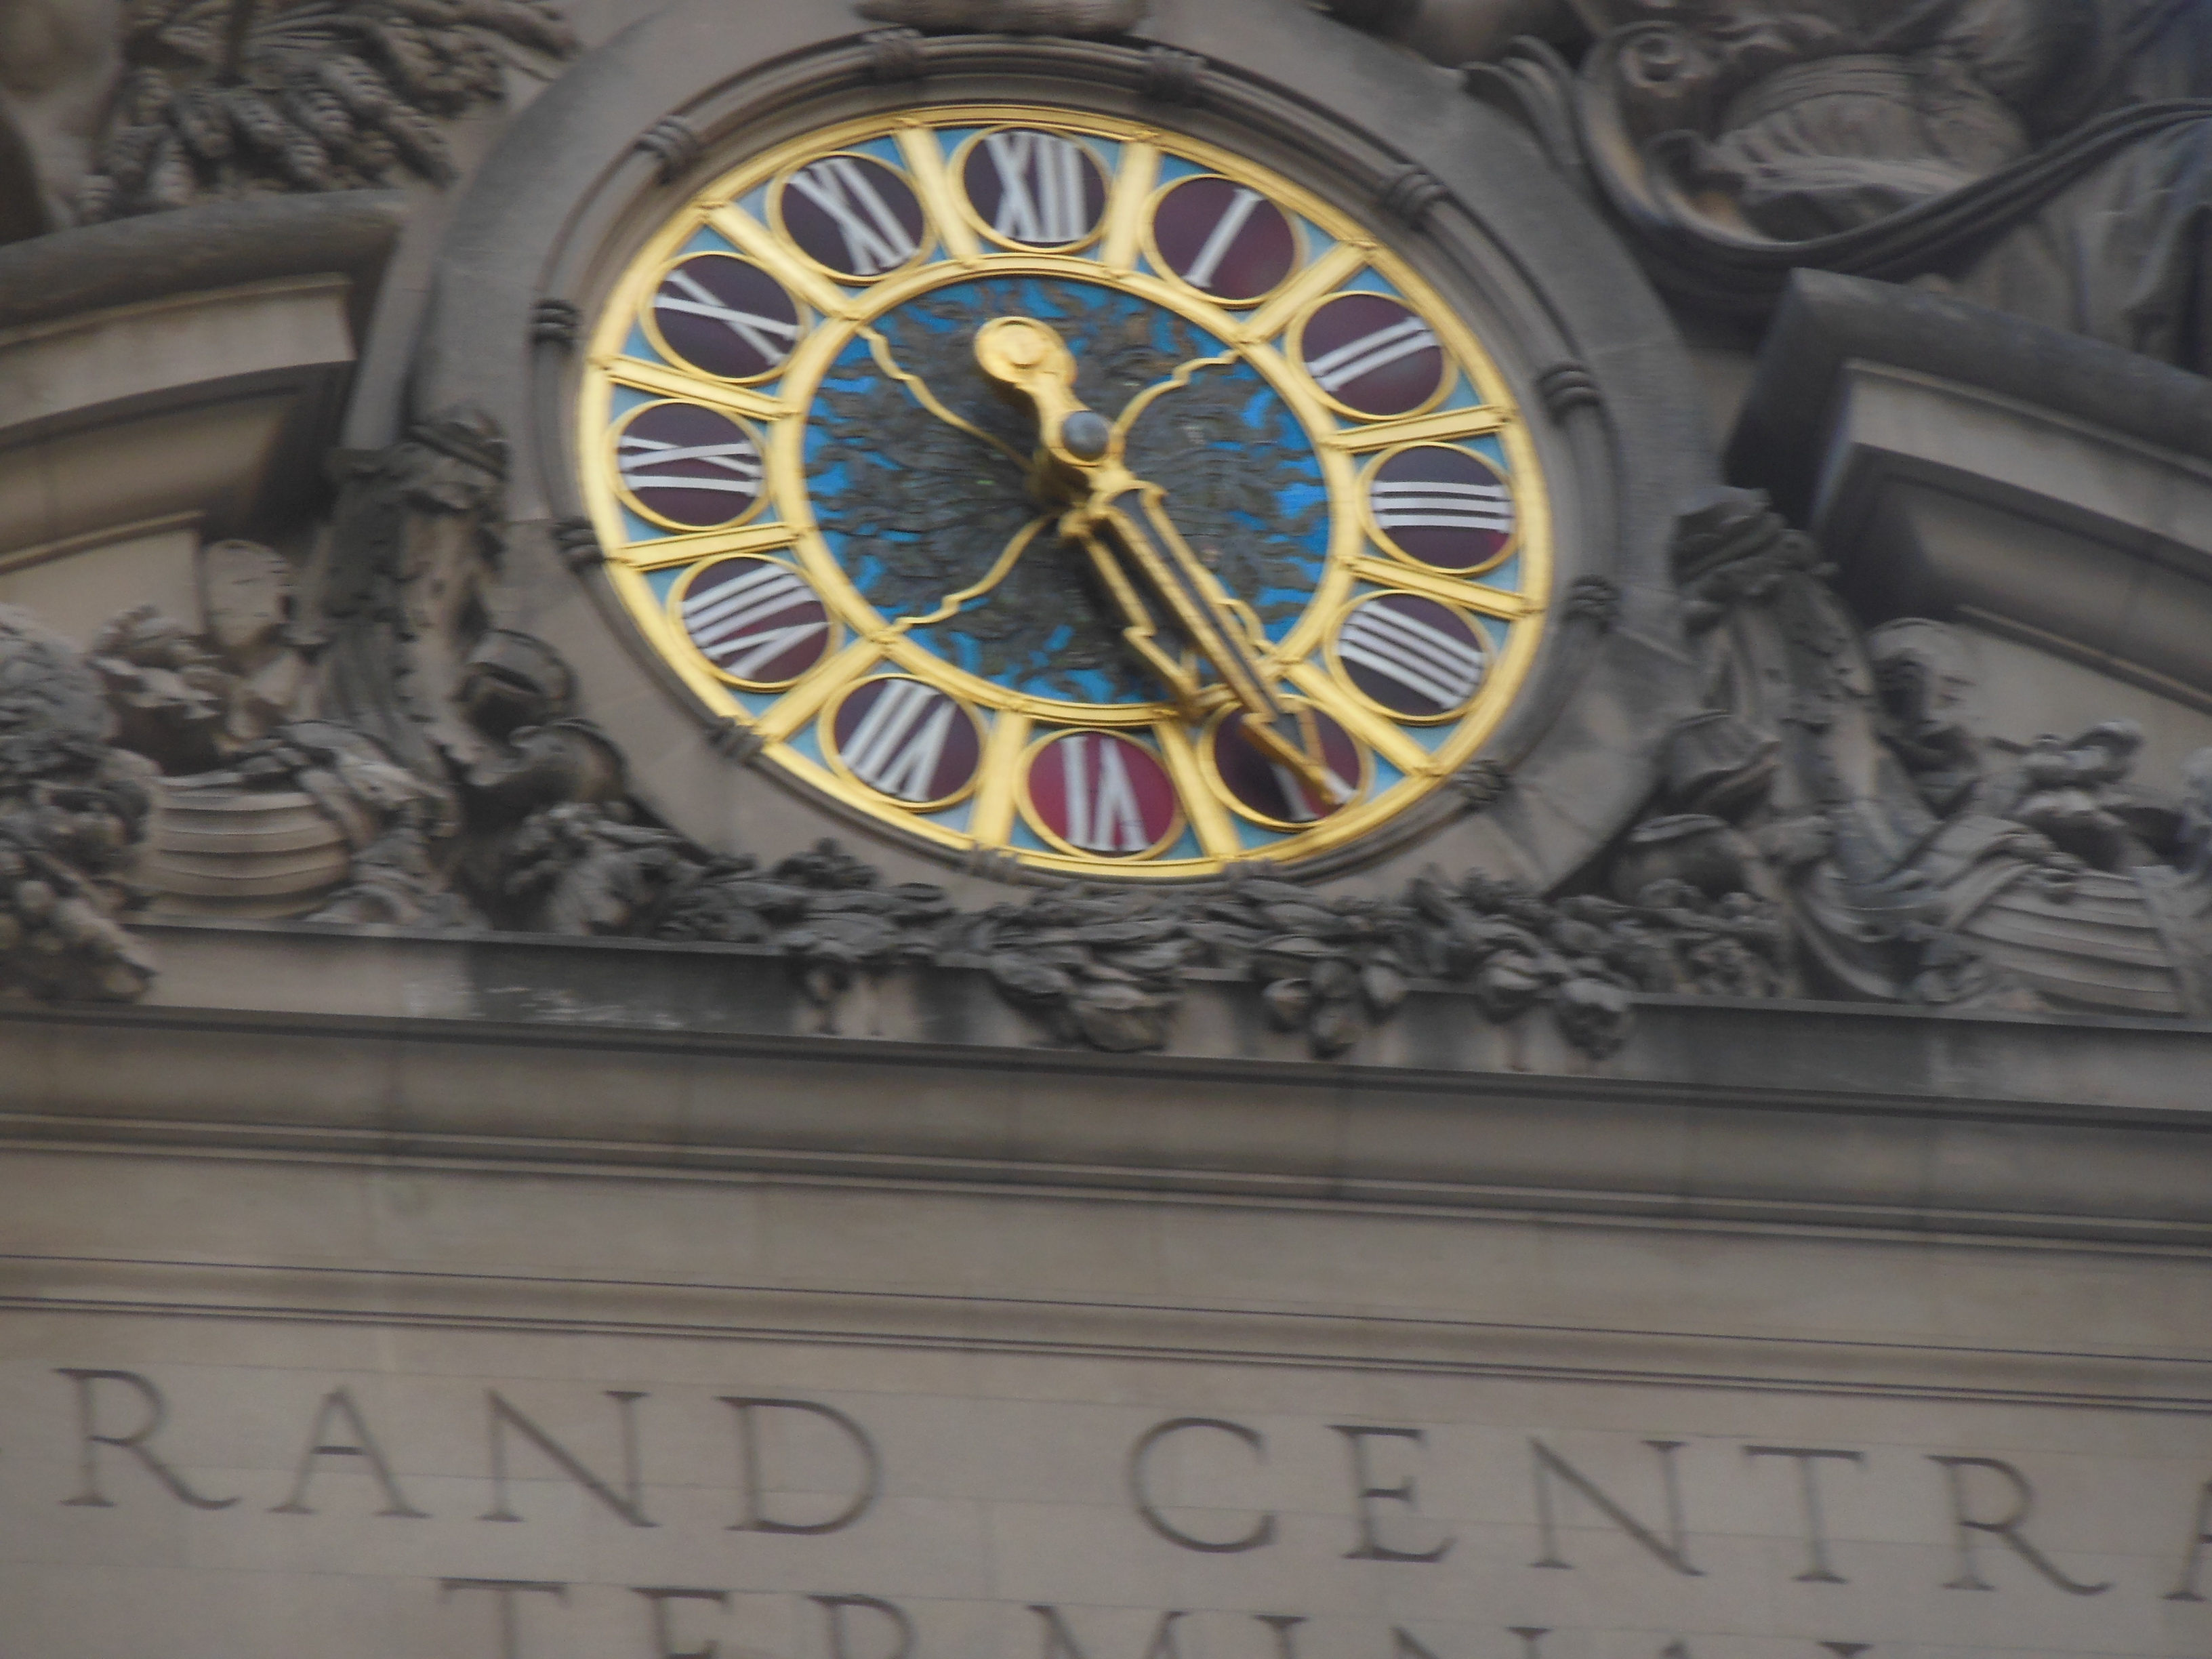 Tiffany clock over Grand Central entrance